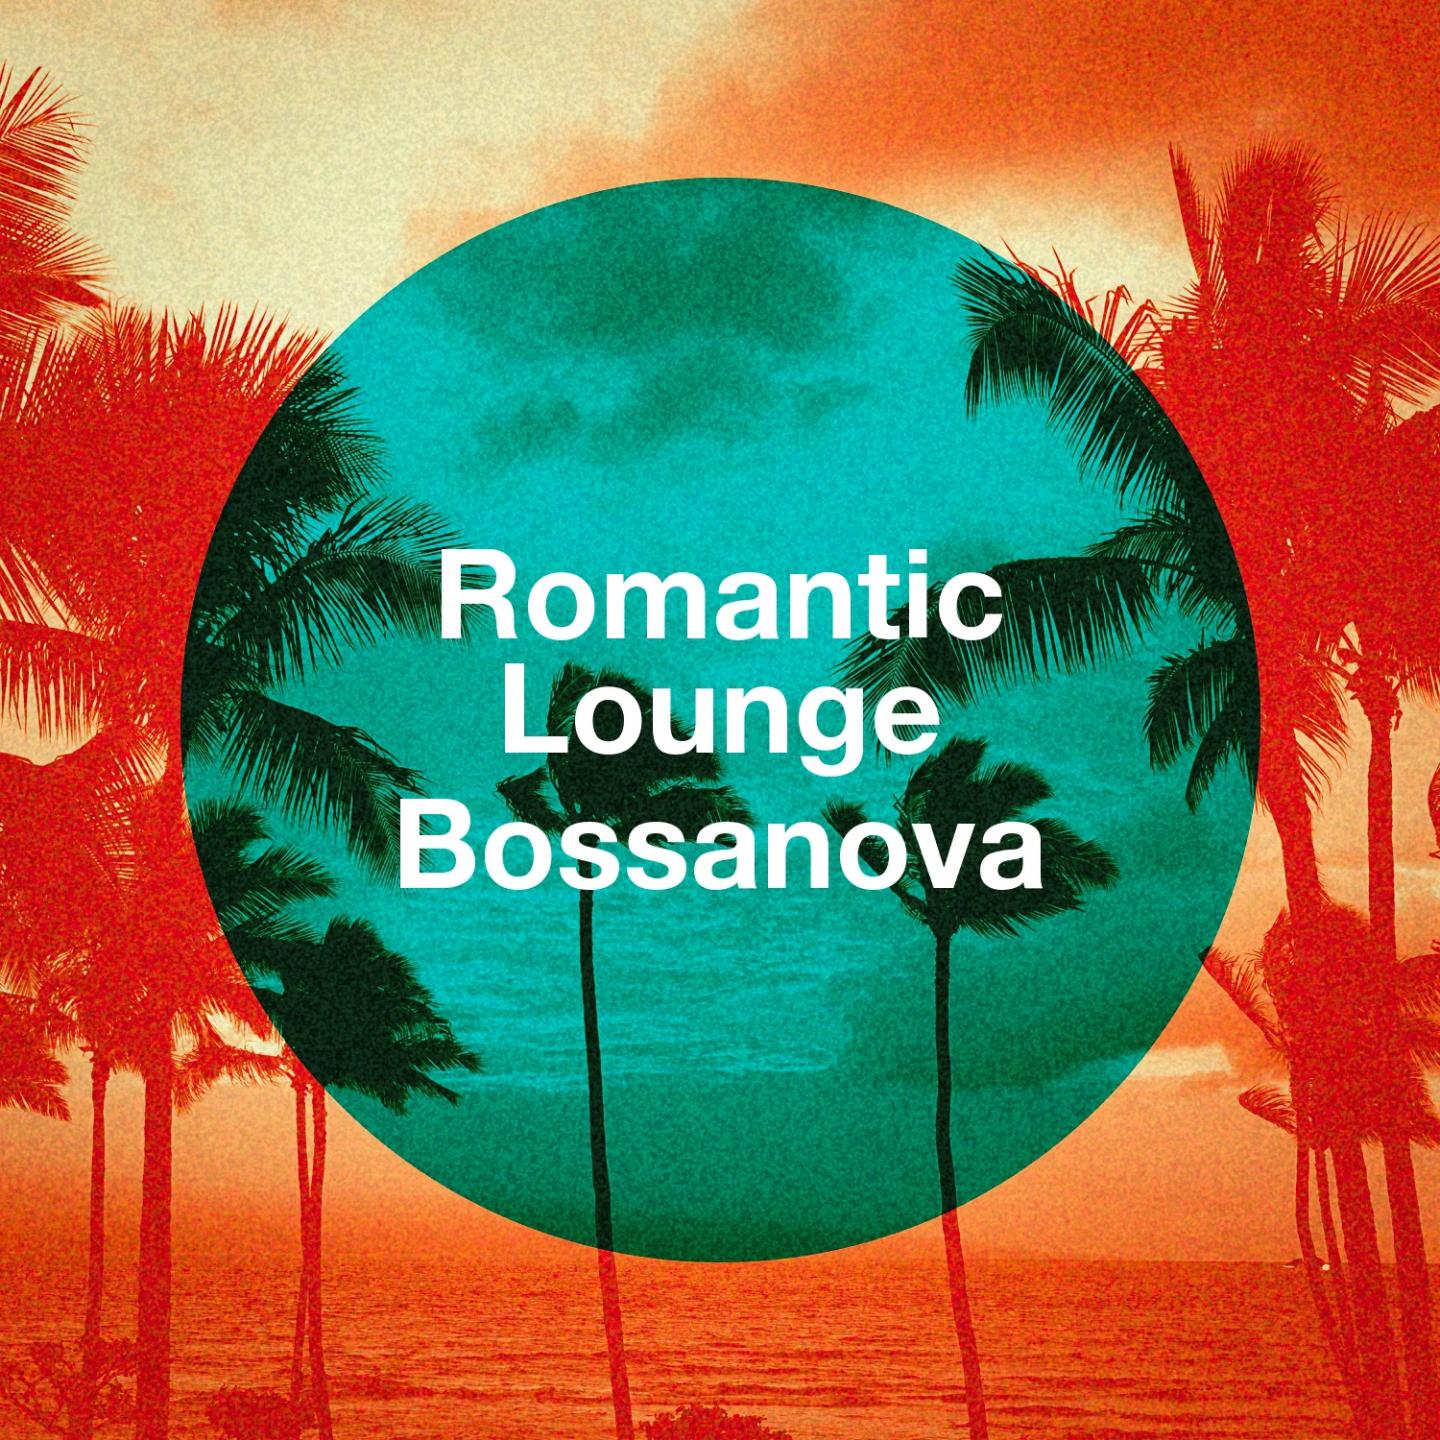 Romantic lounge bossanova